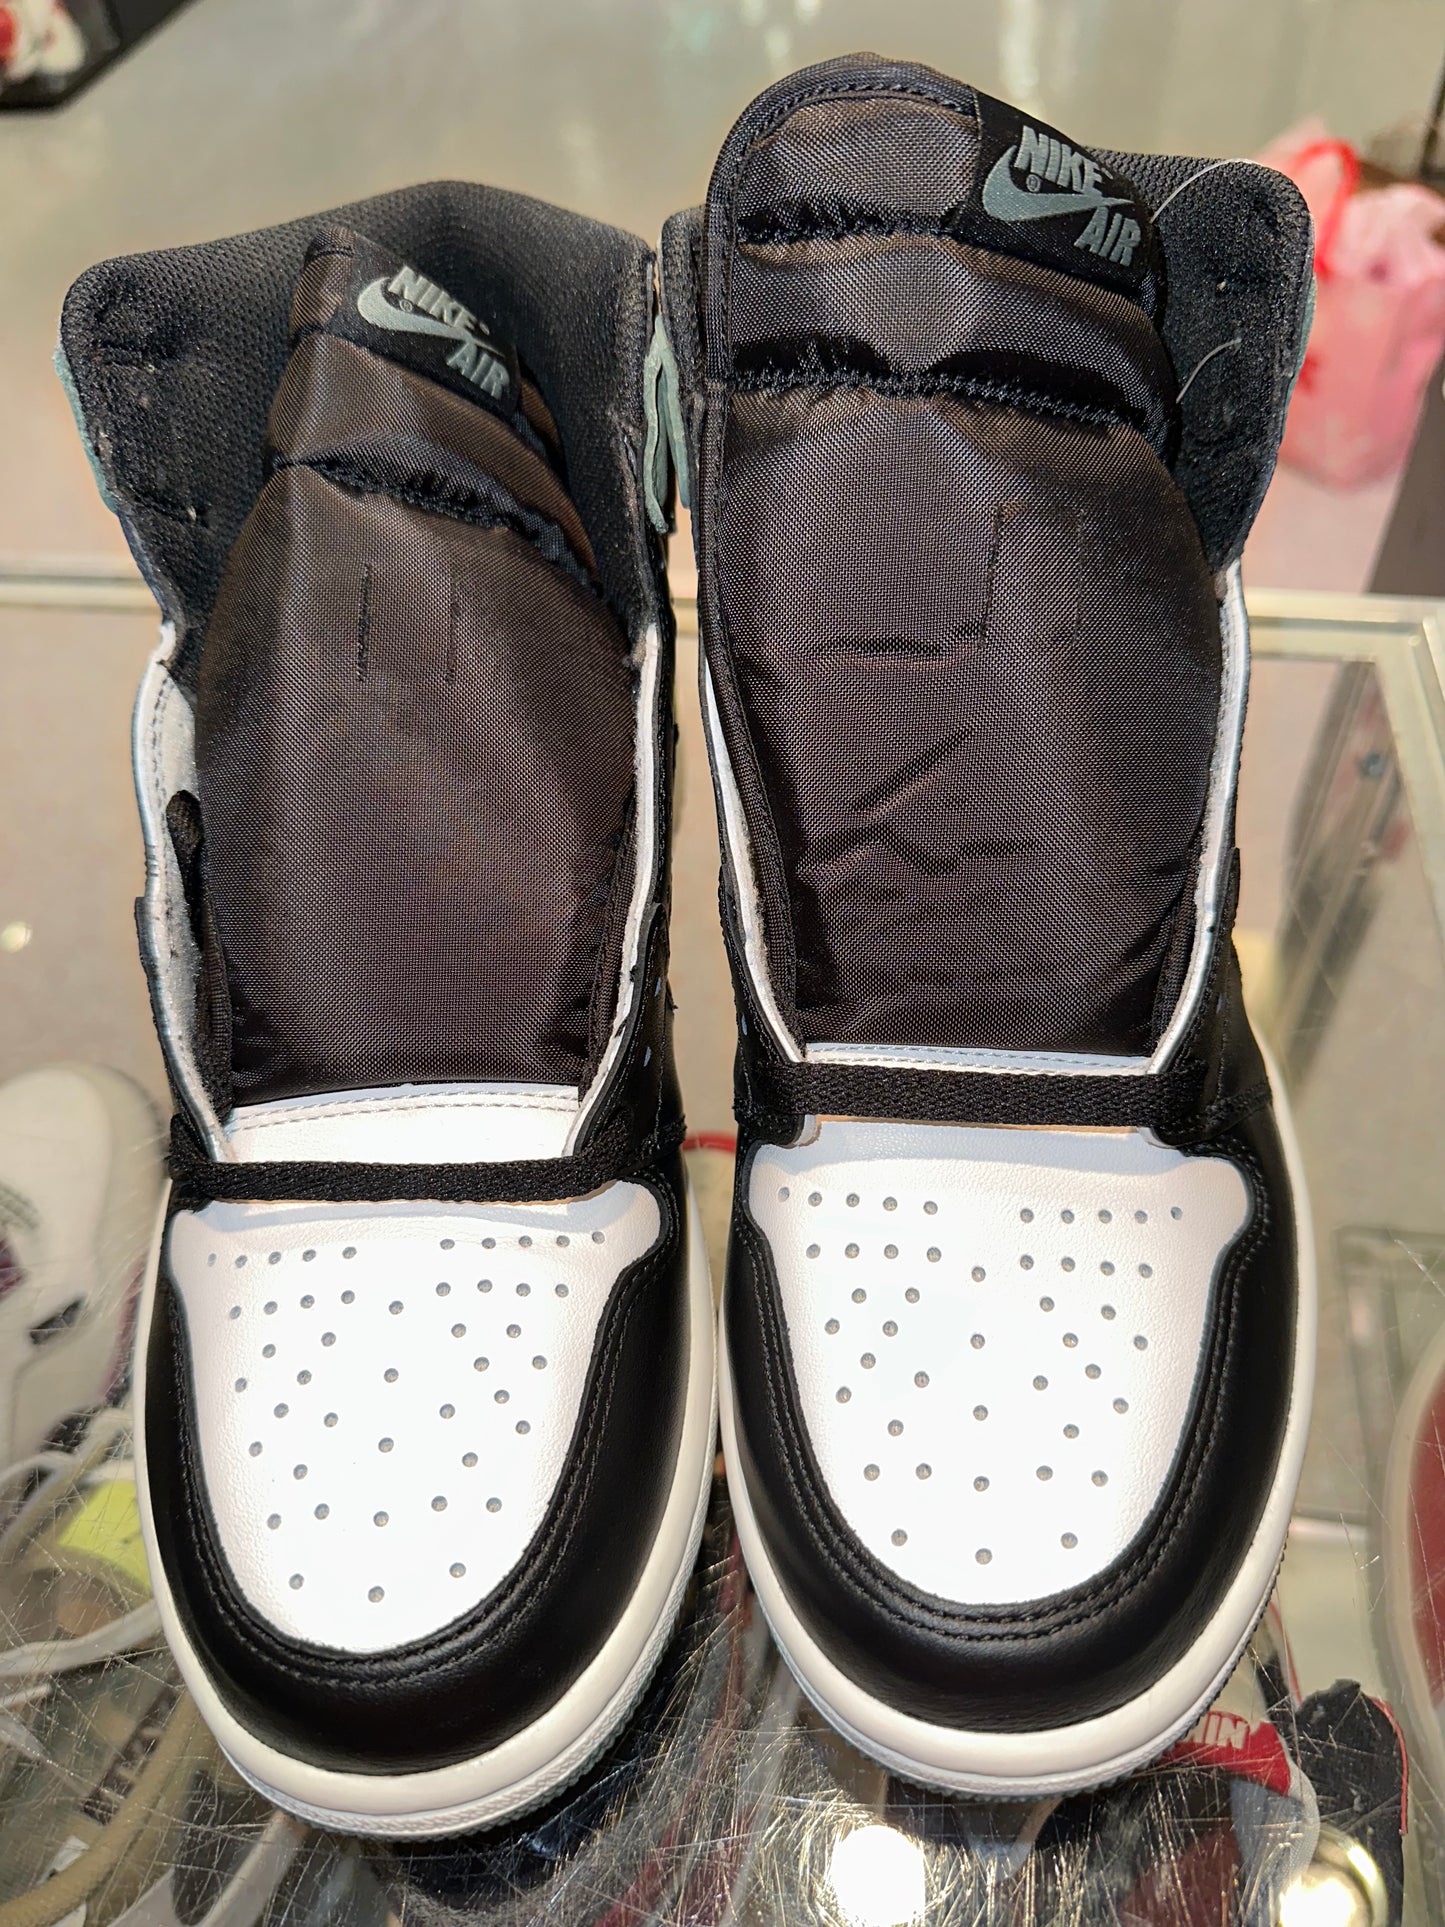 Size 8 Air Jordan 1 “Clay Green” Brand New (Mall)